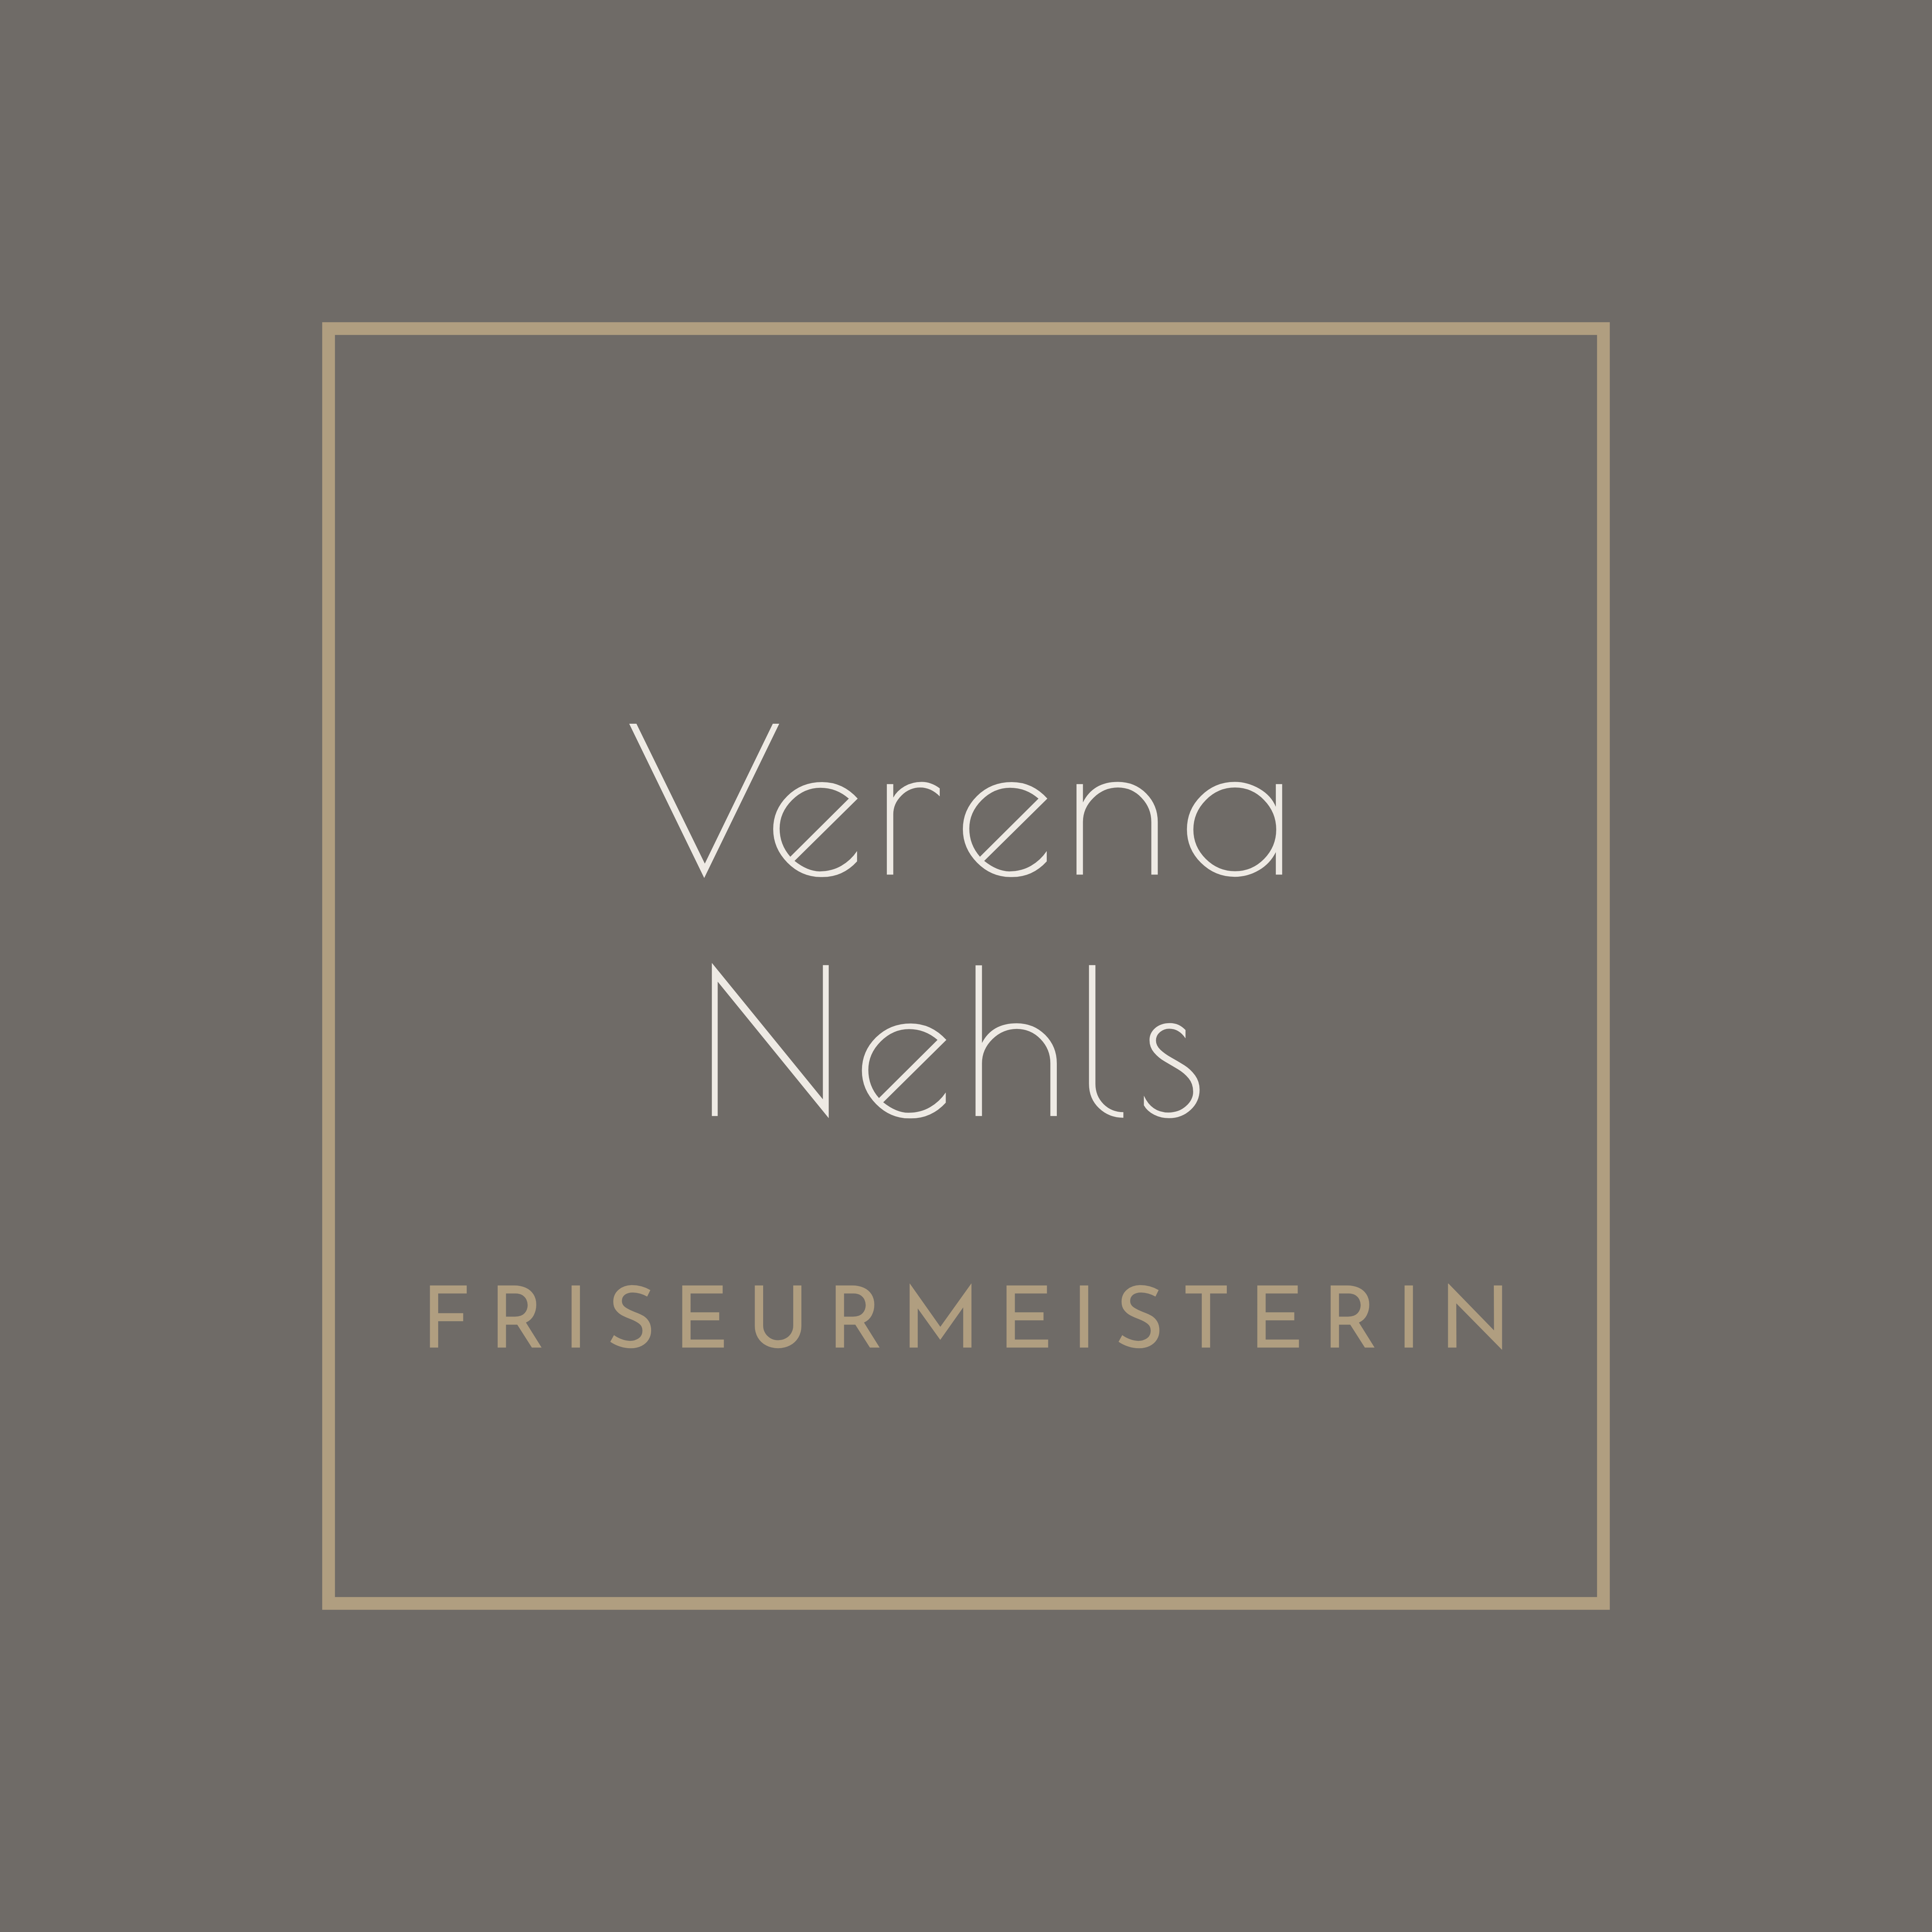 Verena Nehls – Friseurmeisterin